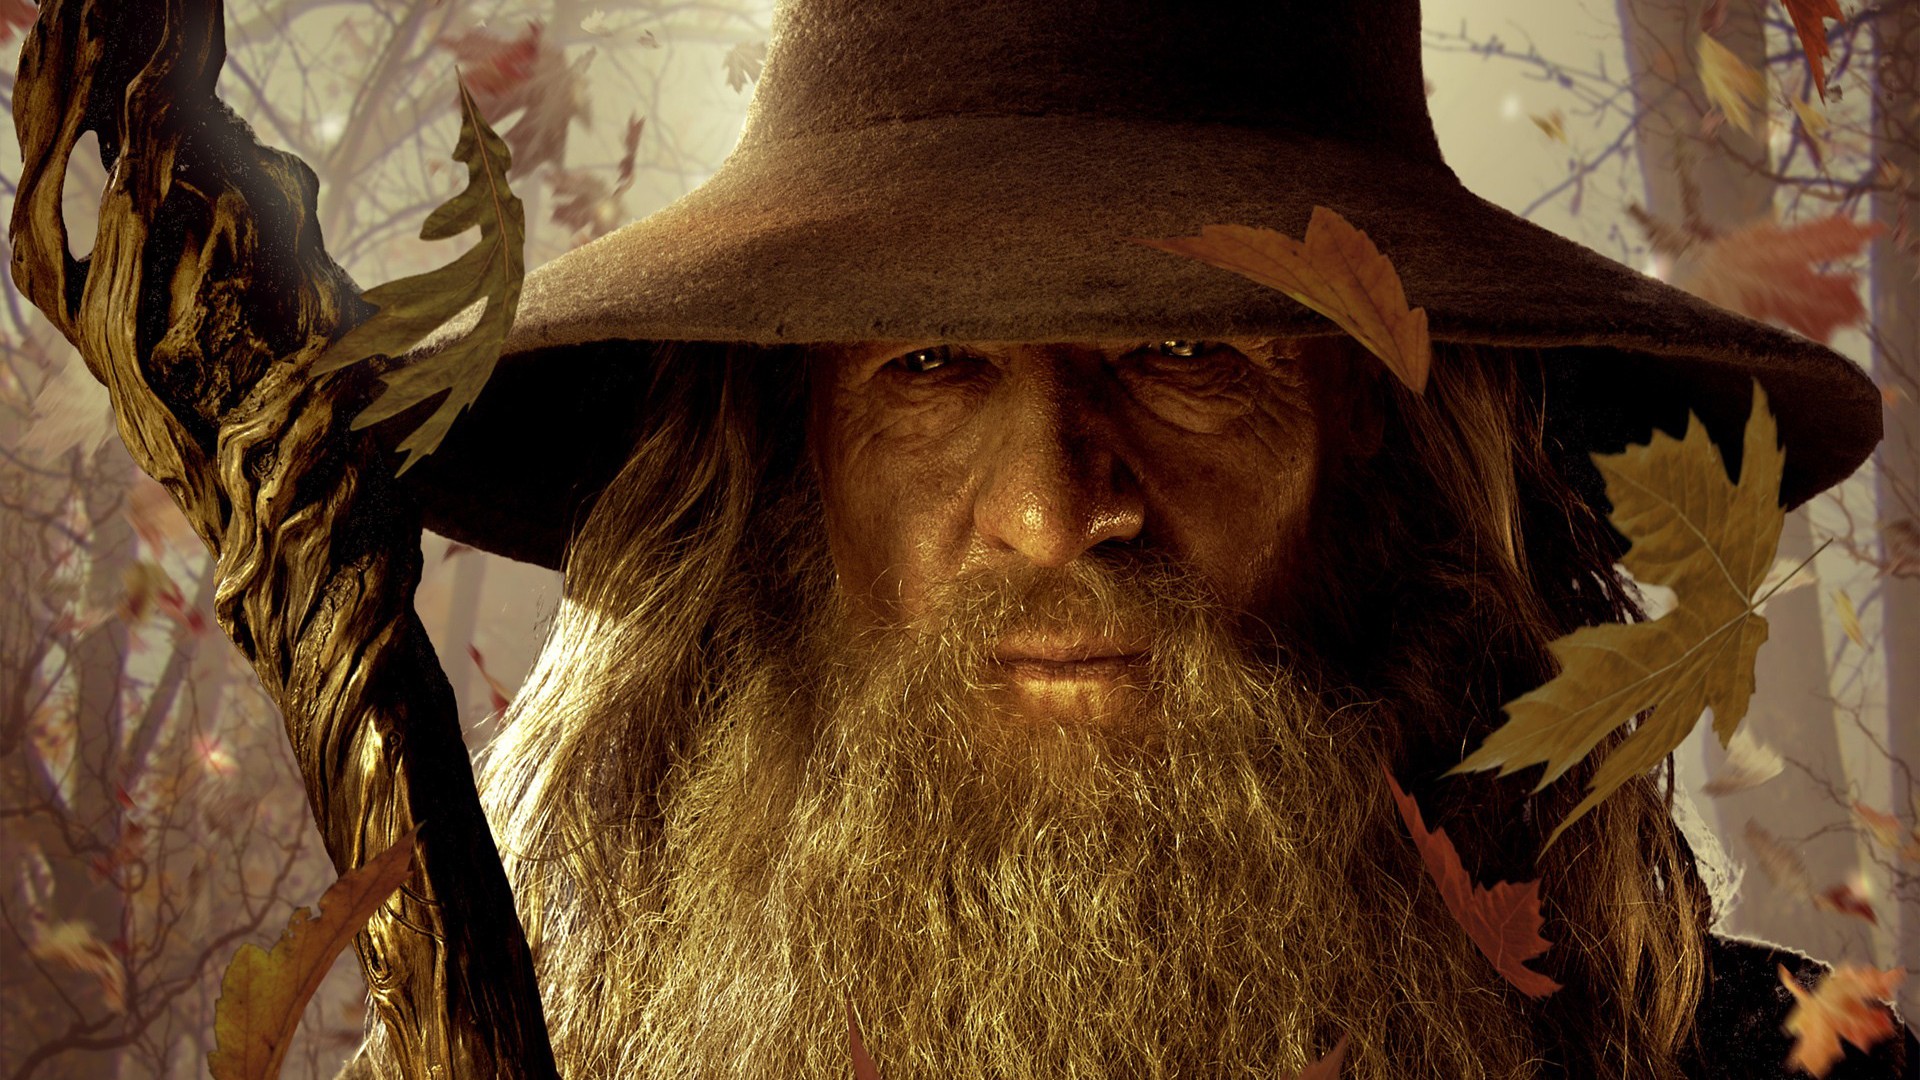 People 1920x1080 Gandalf wizard hat The Lord of the Rings Ian McKellen staff beard men actor movies